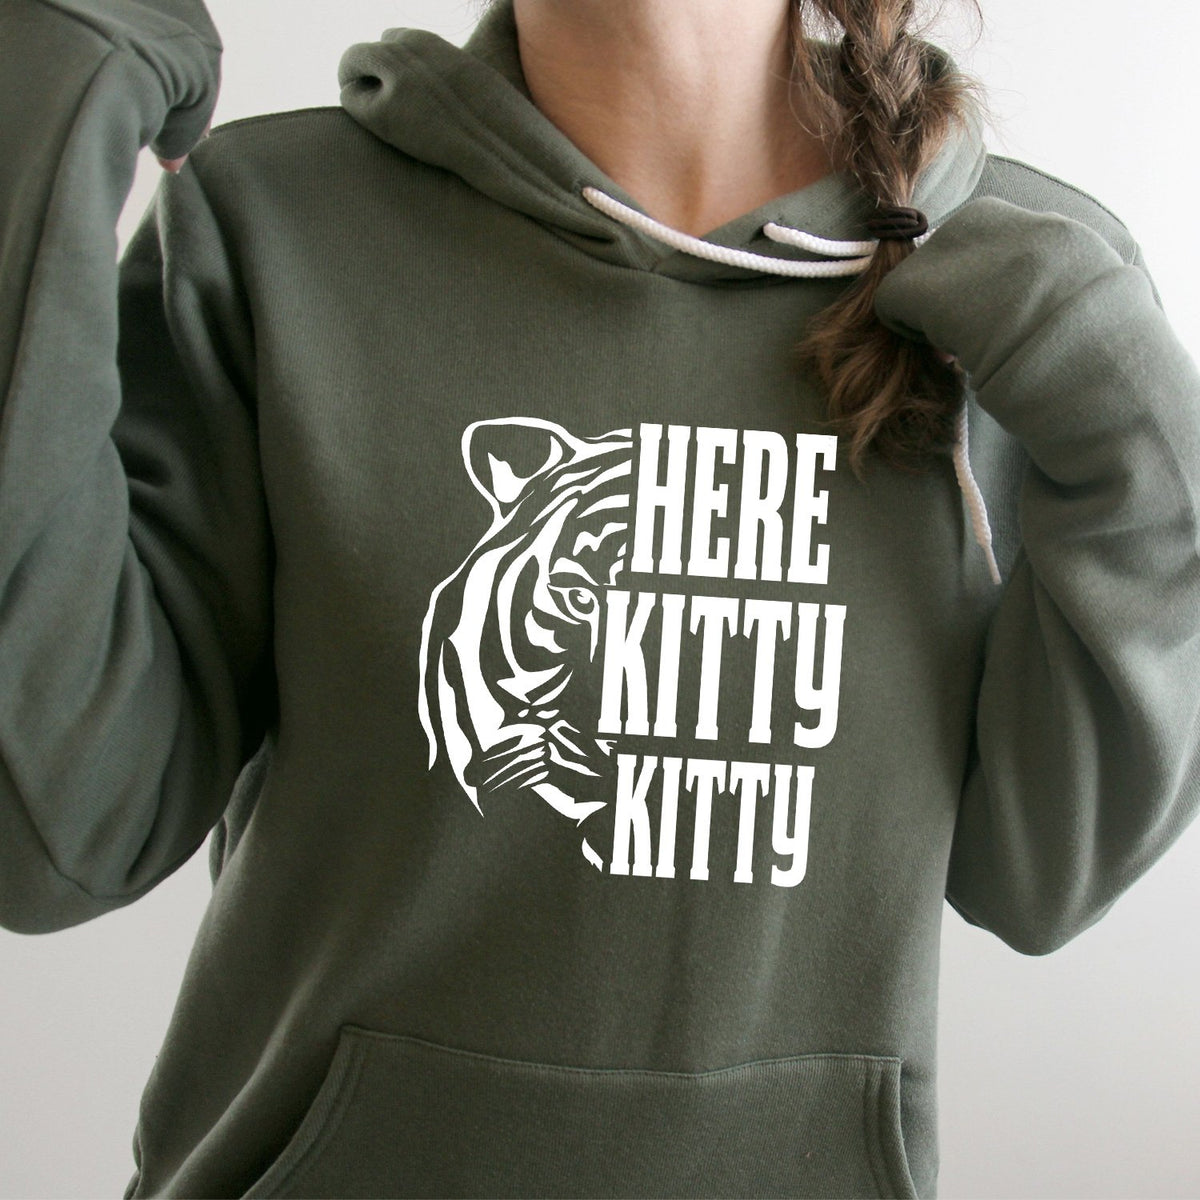 Here Kitty Kitty with Tiger - Hoodie Sweatshirt